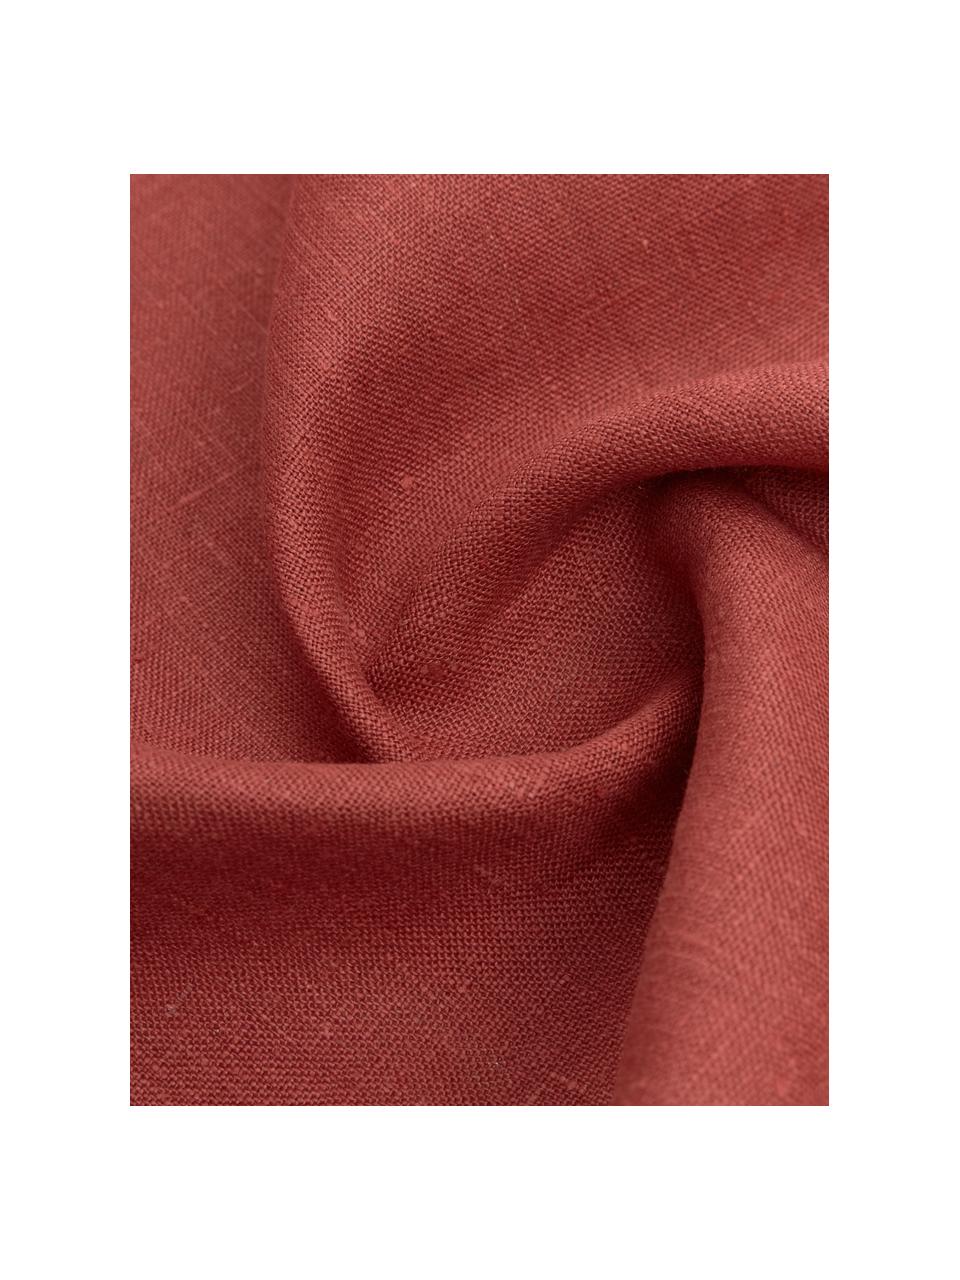 Mantel de lino Heddie, 100% lino, Rojo, An 145 x L 250 cm